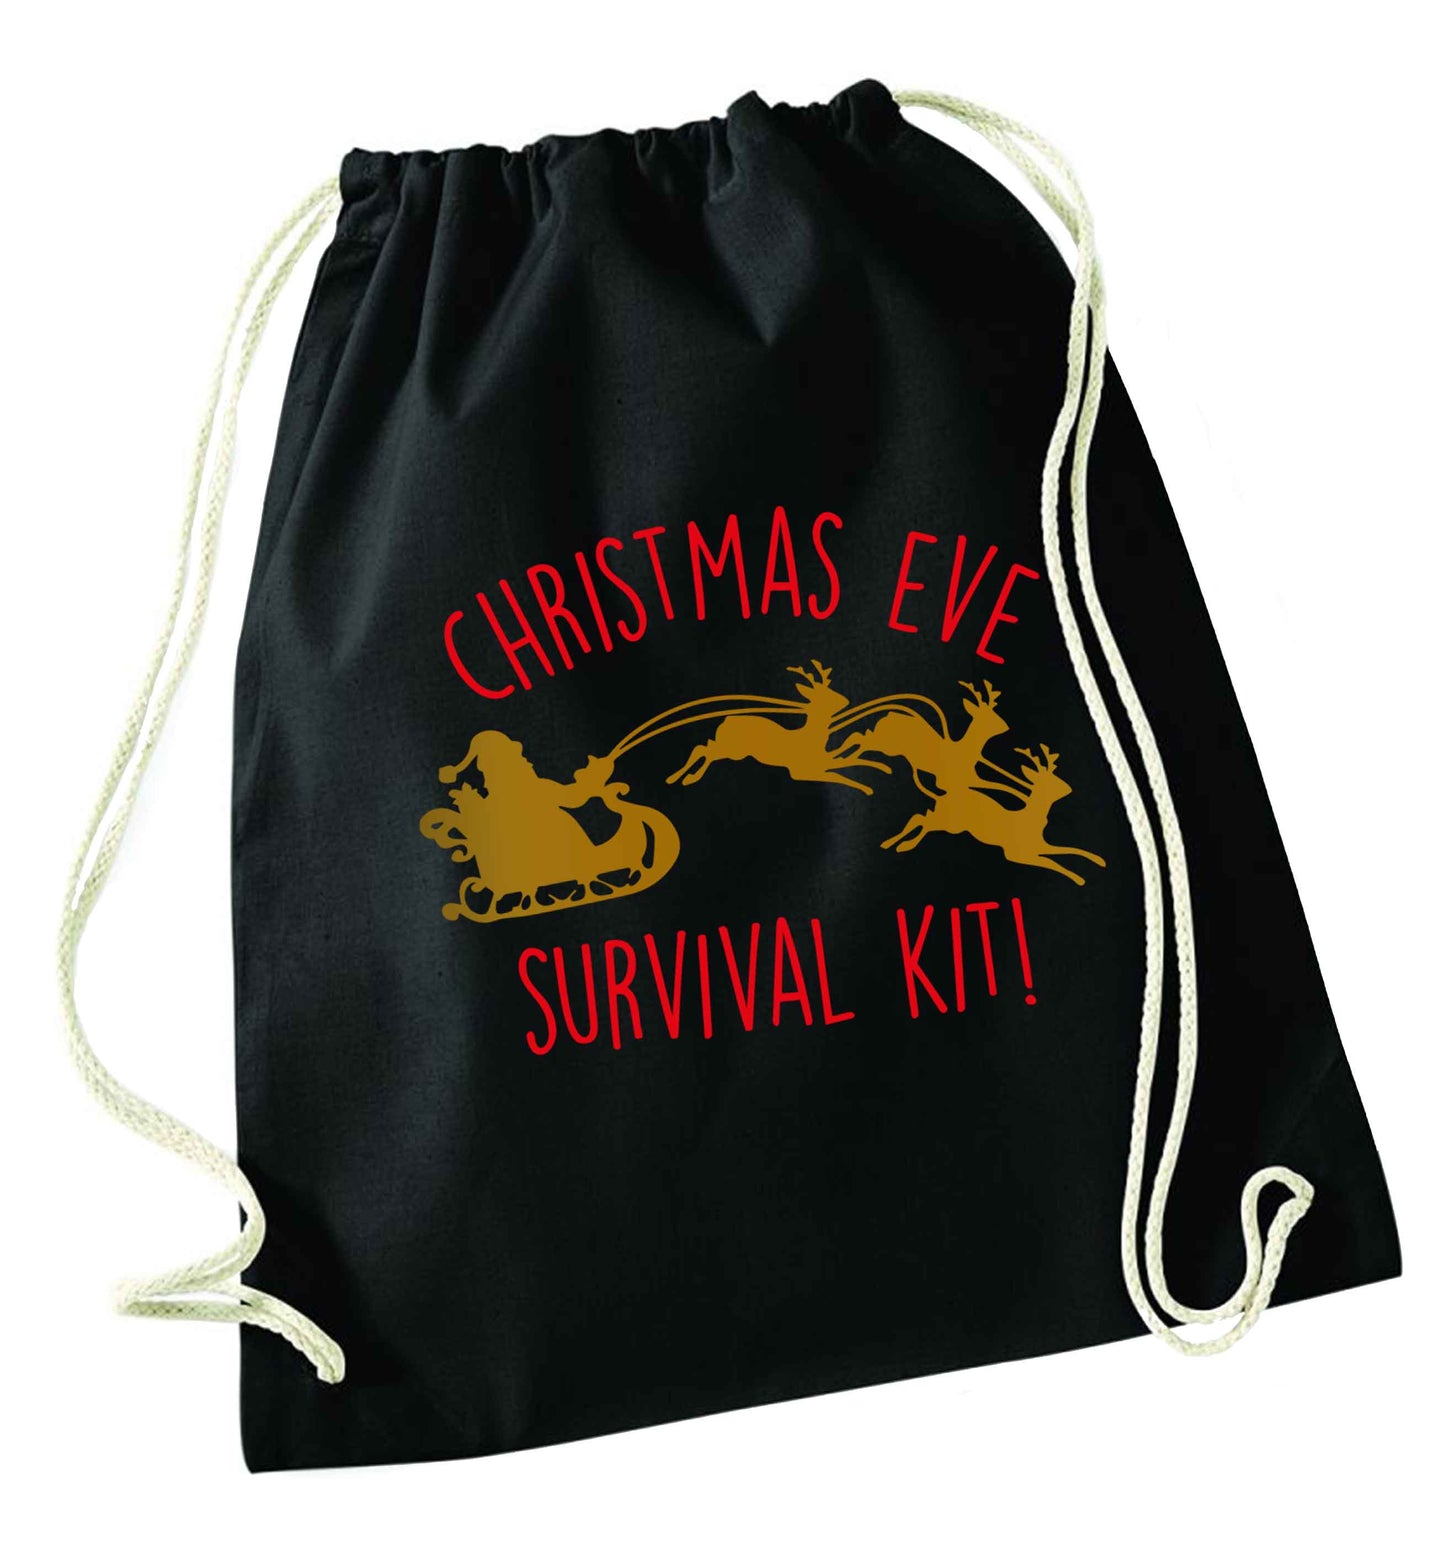 Christmas Day Survival Kitblack drawstring bag